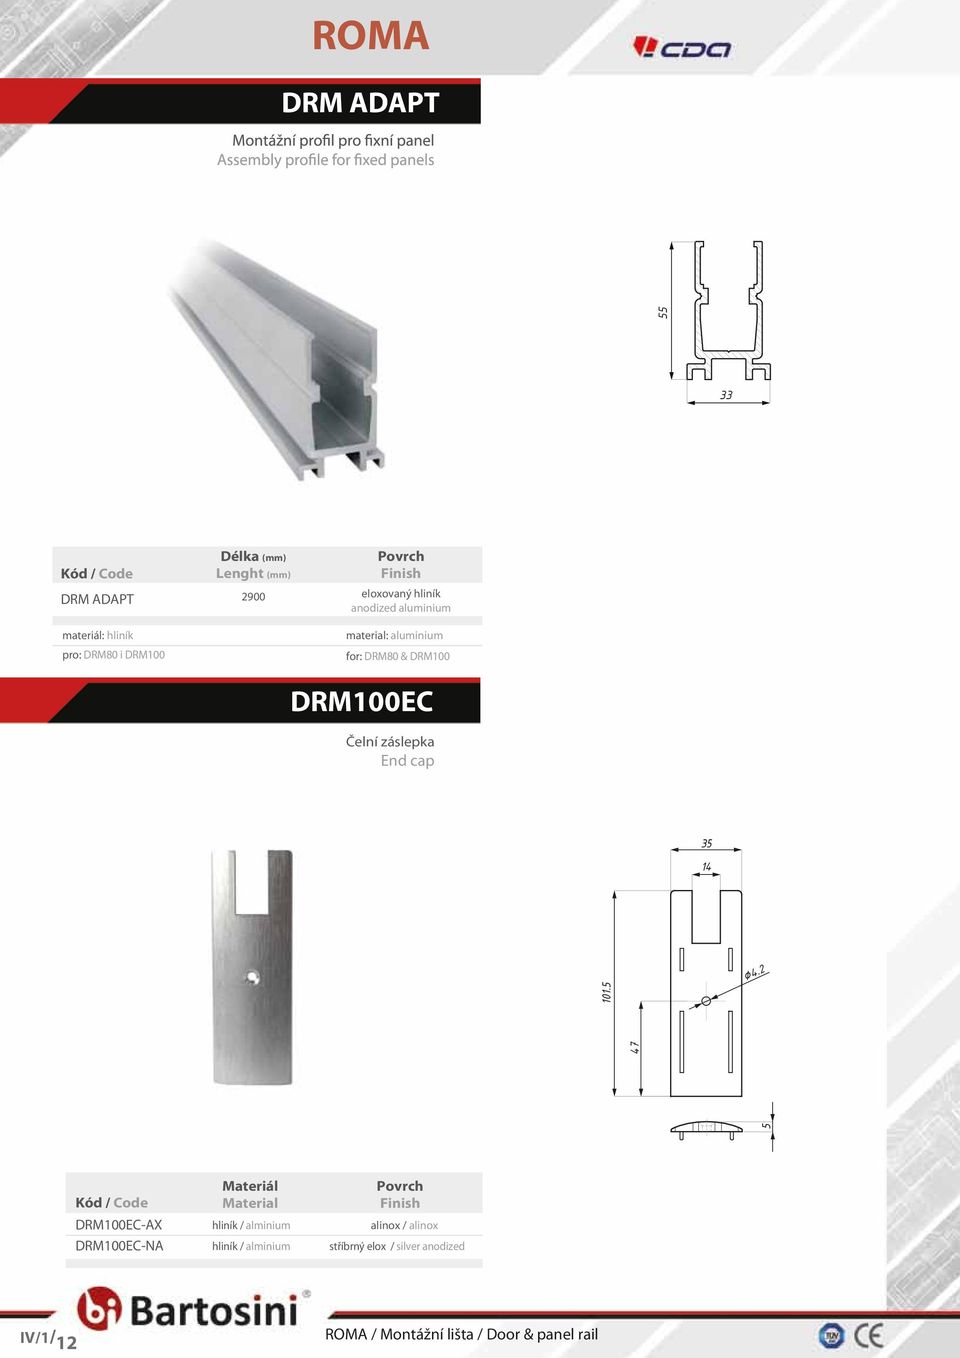 5 55 DRM ADAPT materiál: hliník pro: DRM0 i DRM0 Délka (mm) Lenght